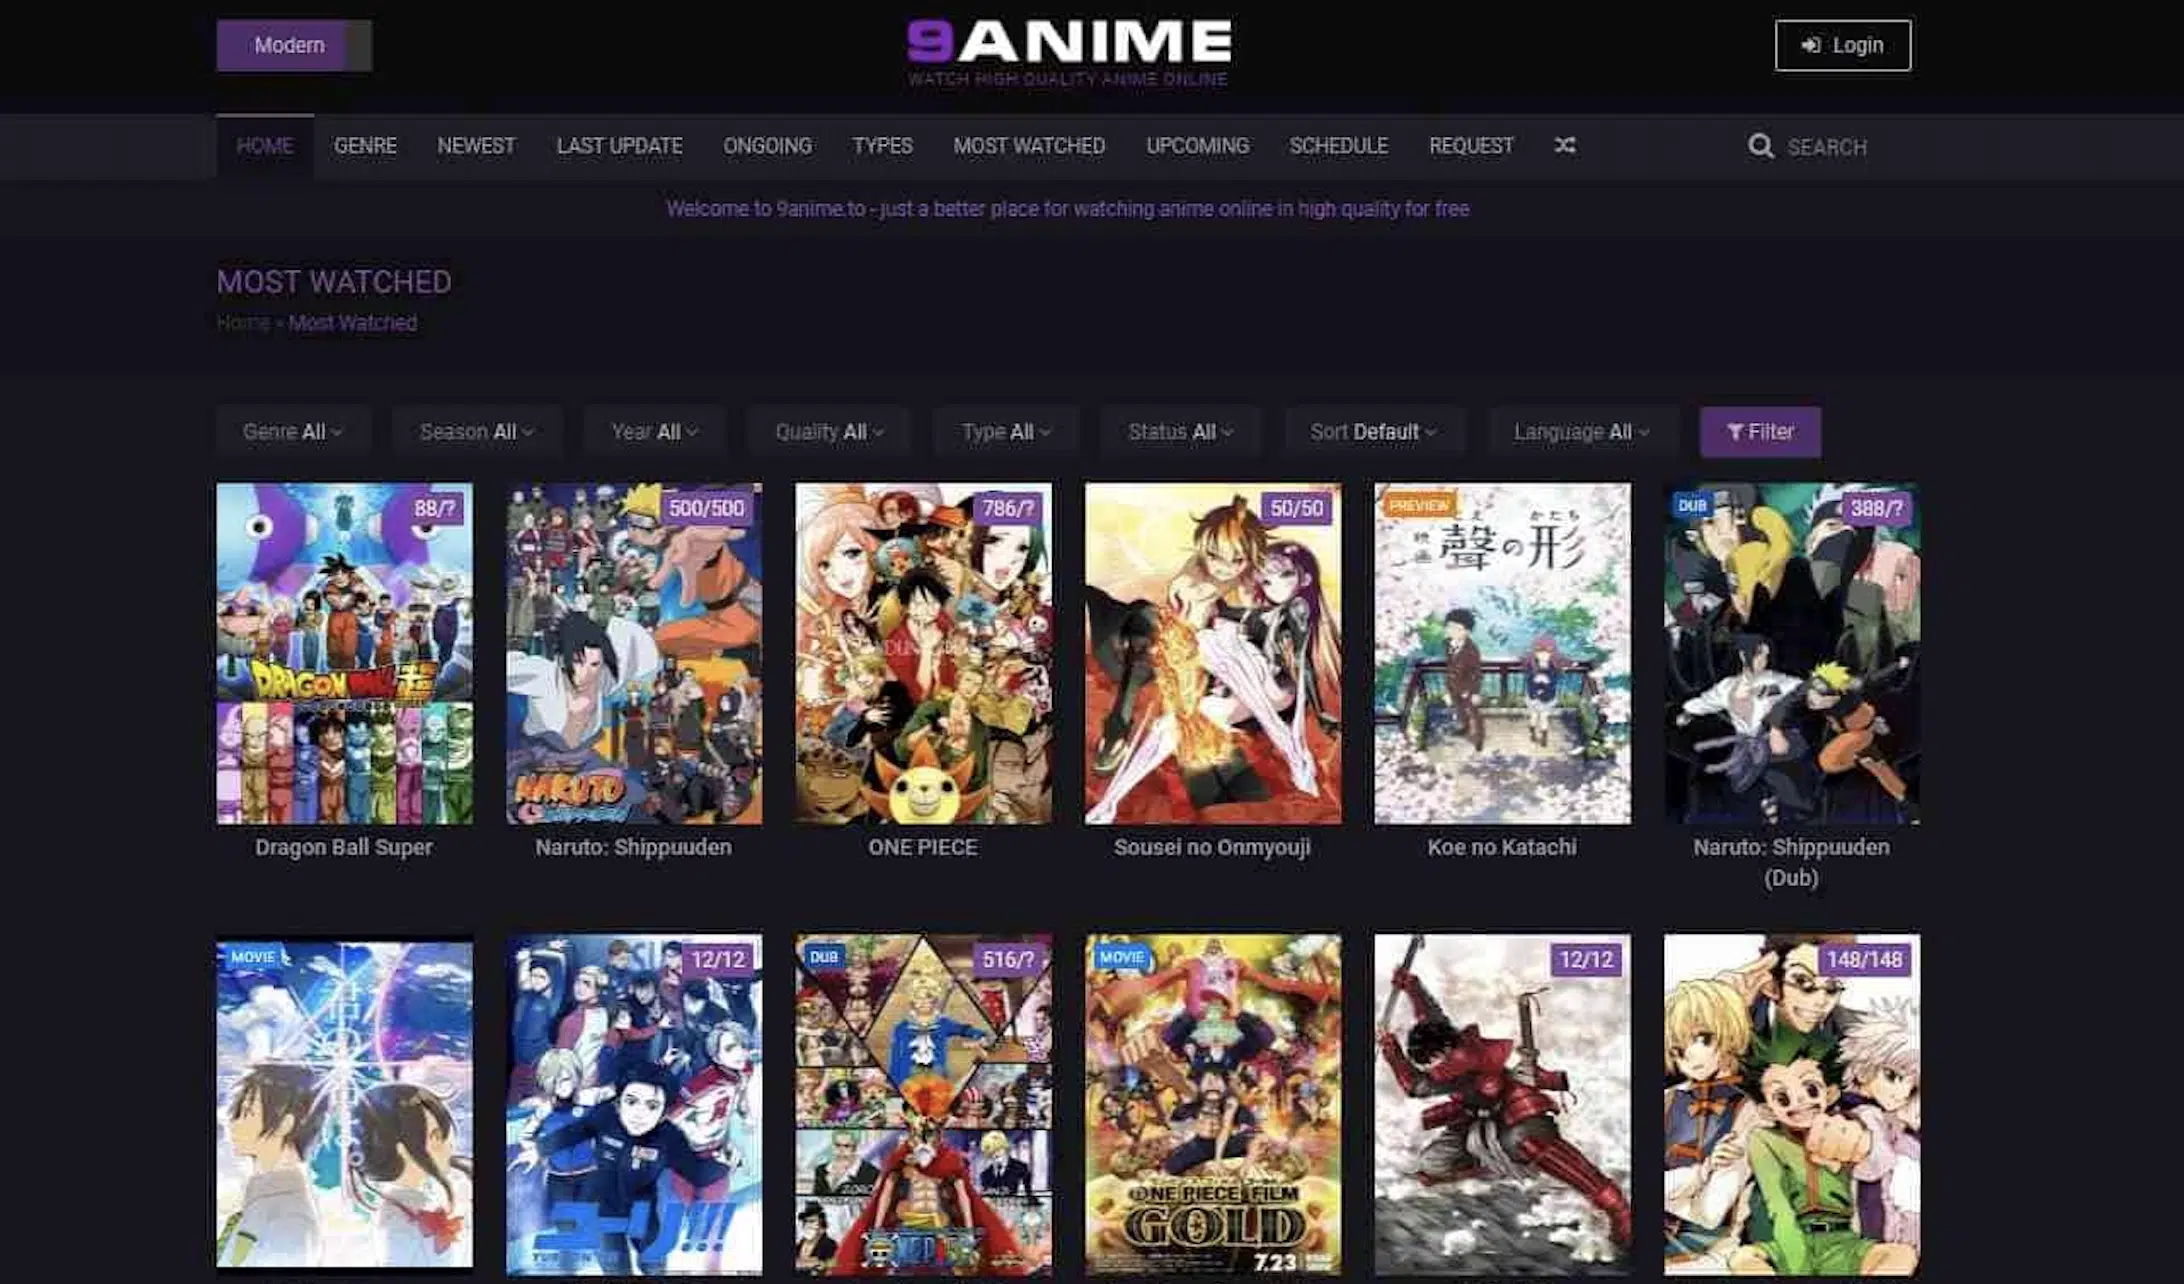 9Anime anime streaming website